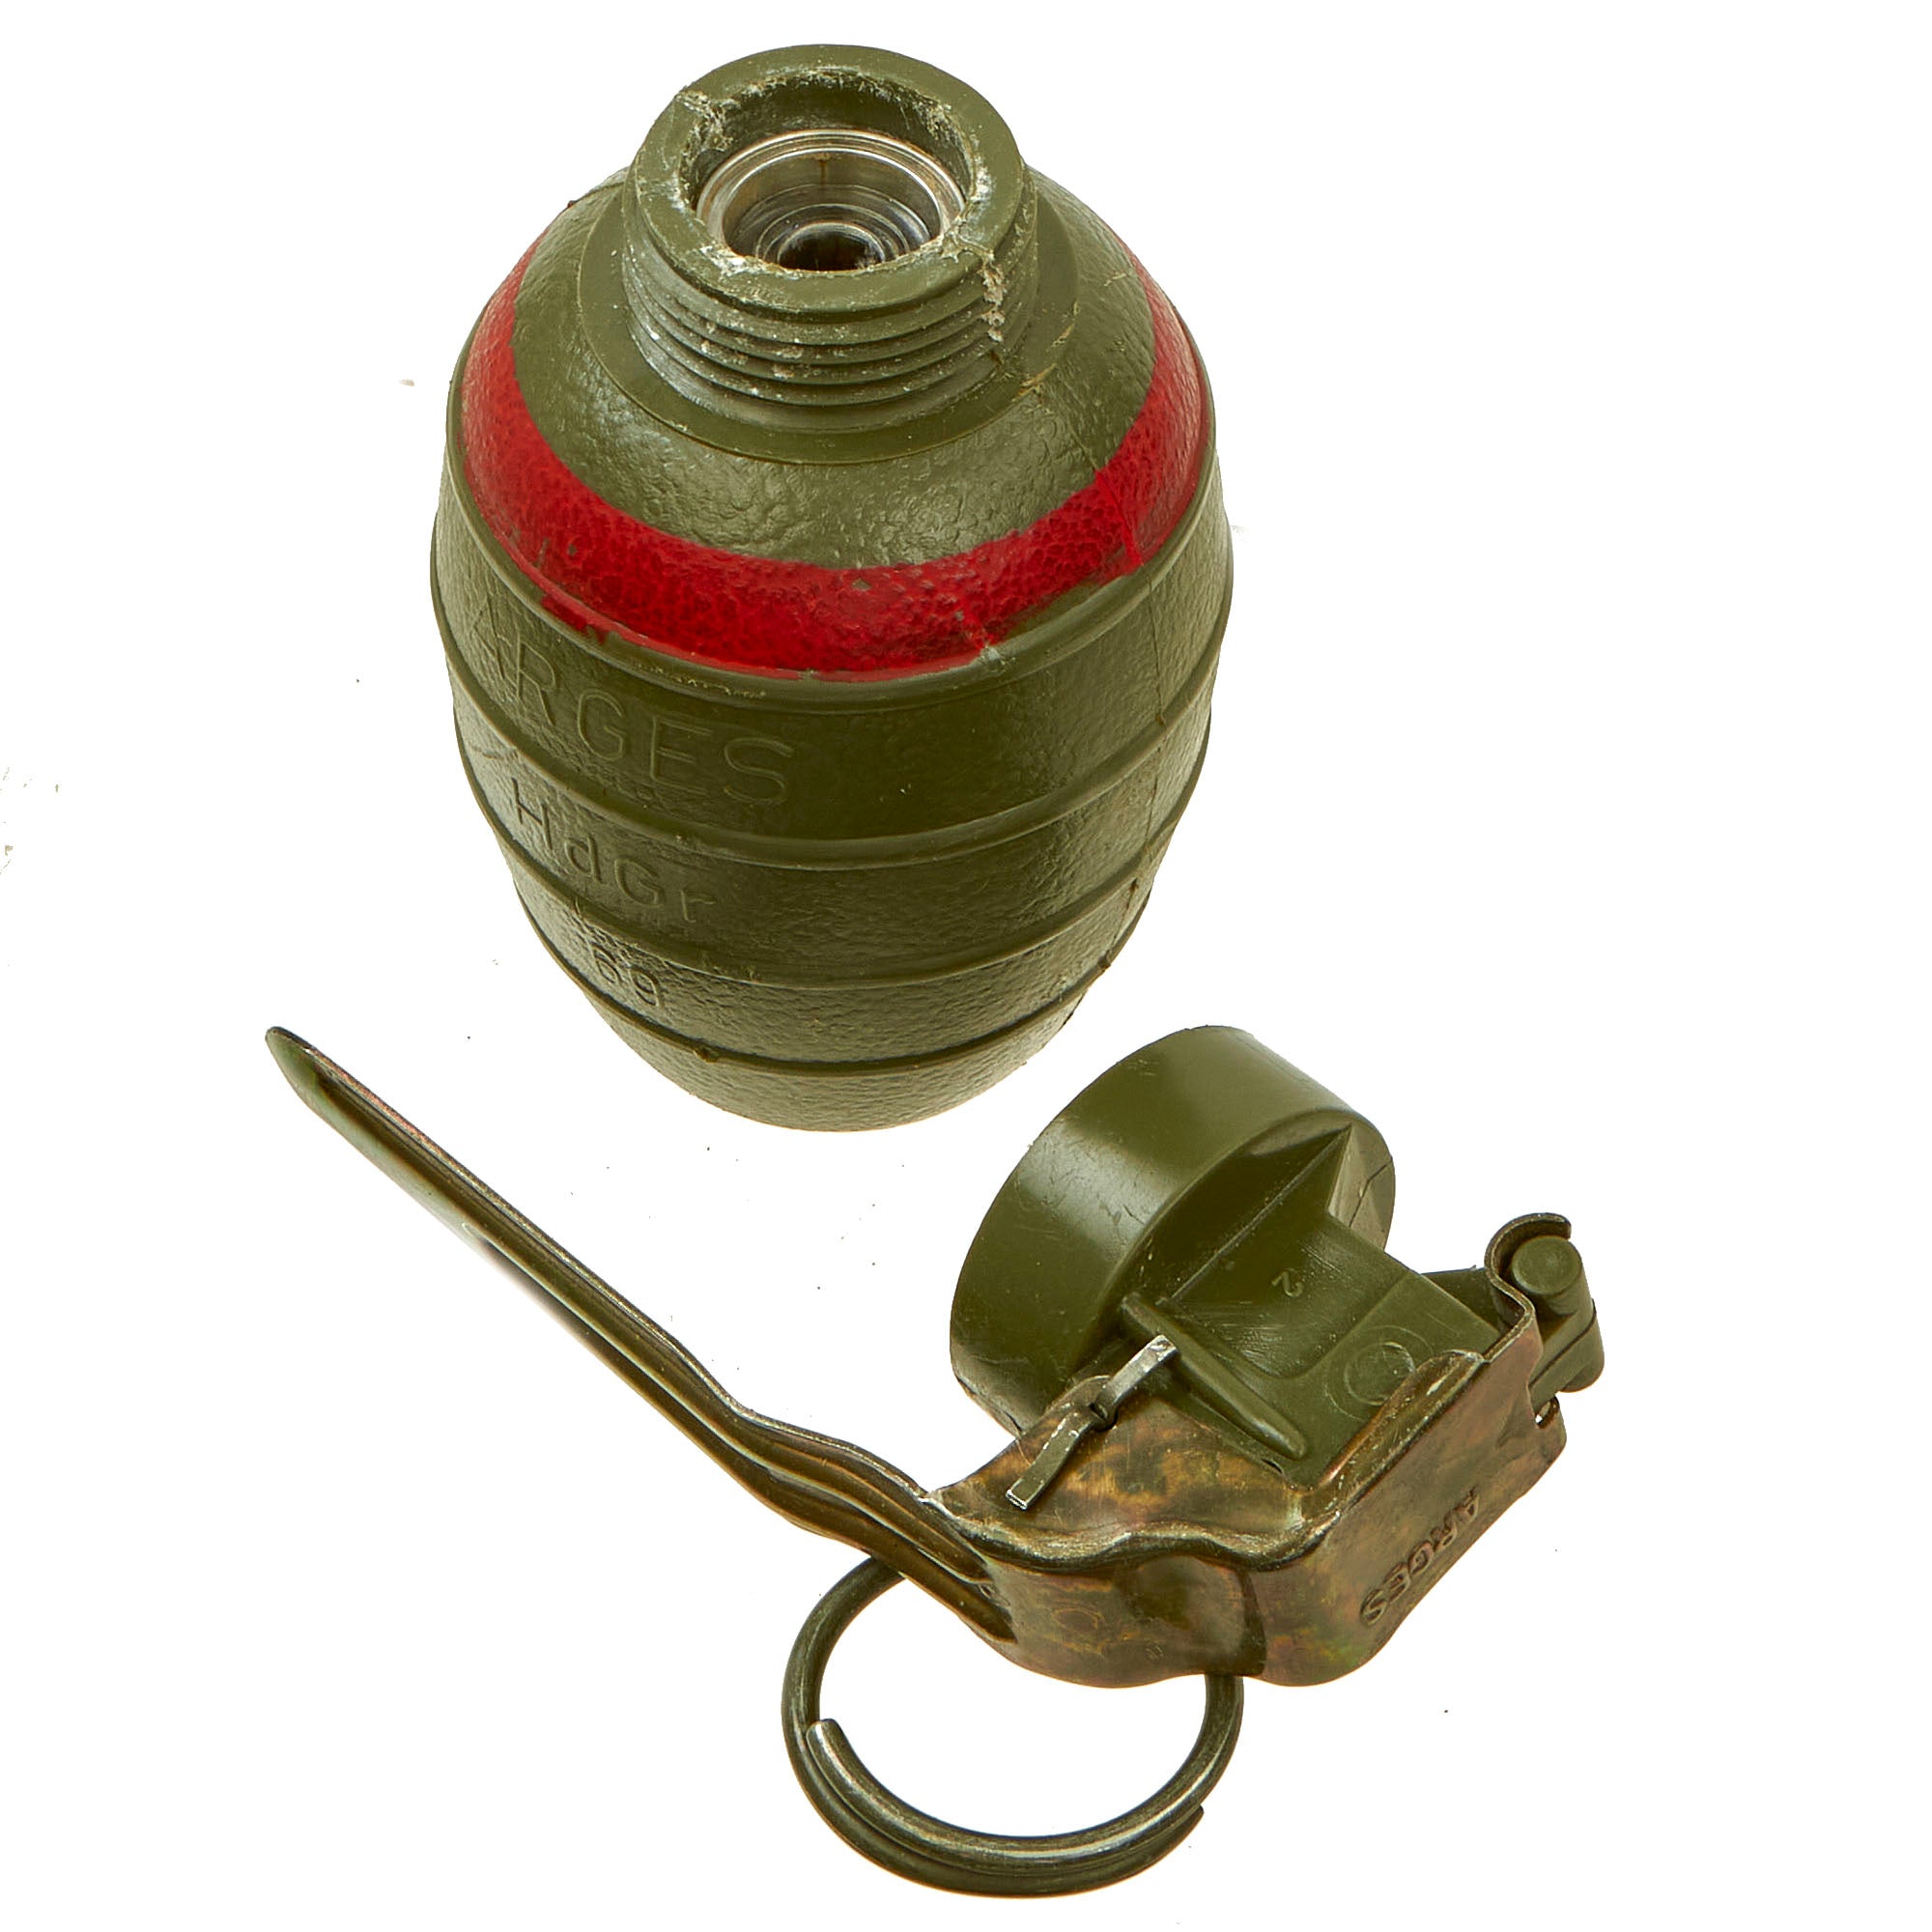 Grenades, Land Mines and U.S. Weapons Parts: Argentina Foils Huge